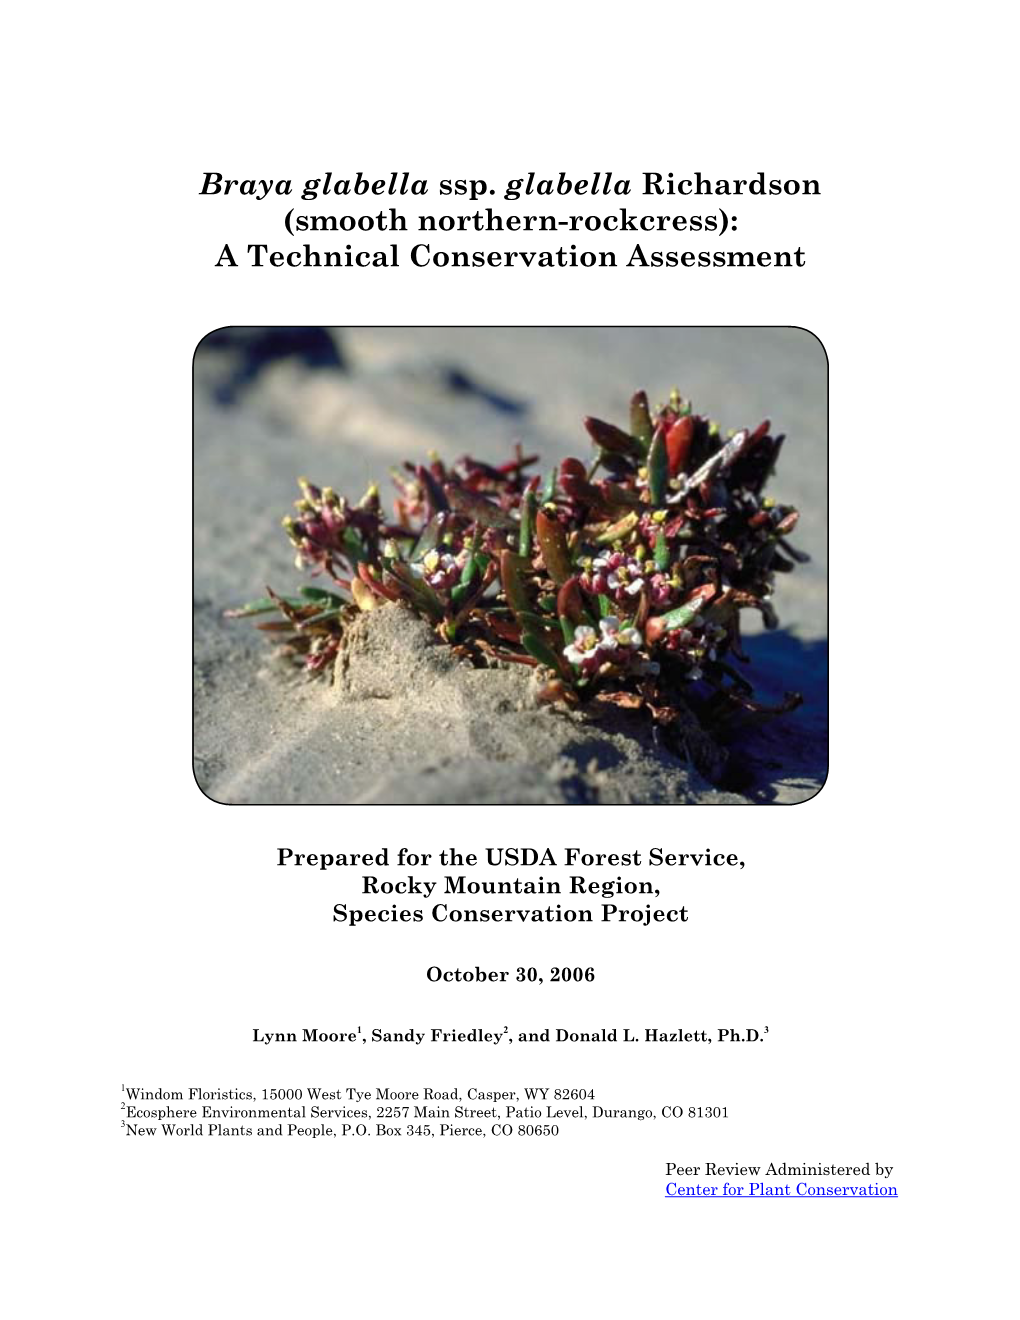 Braya Glabella Ssp. Glabella Richardson (Smooth Northern-Rockcress): a Technical Conservation Assessment